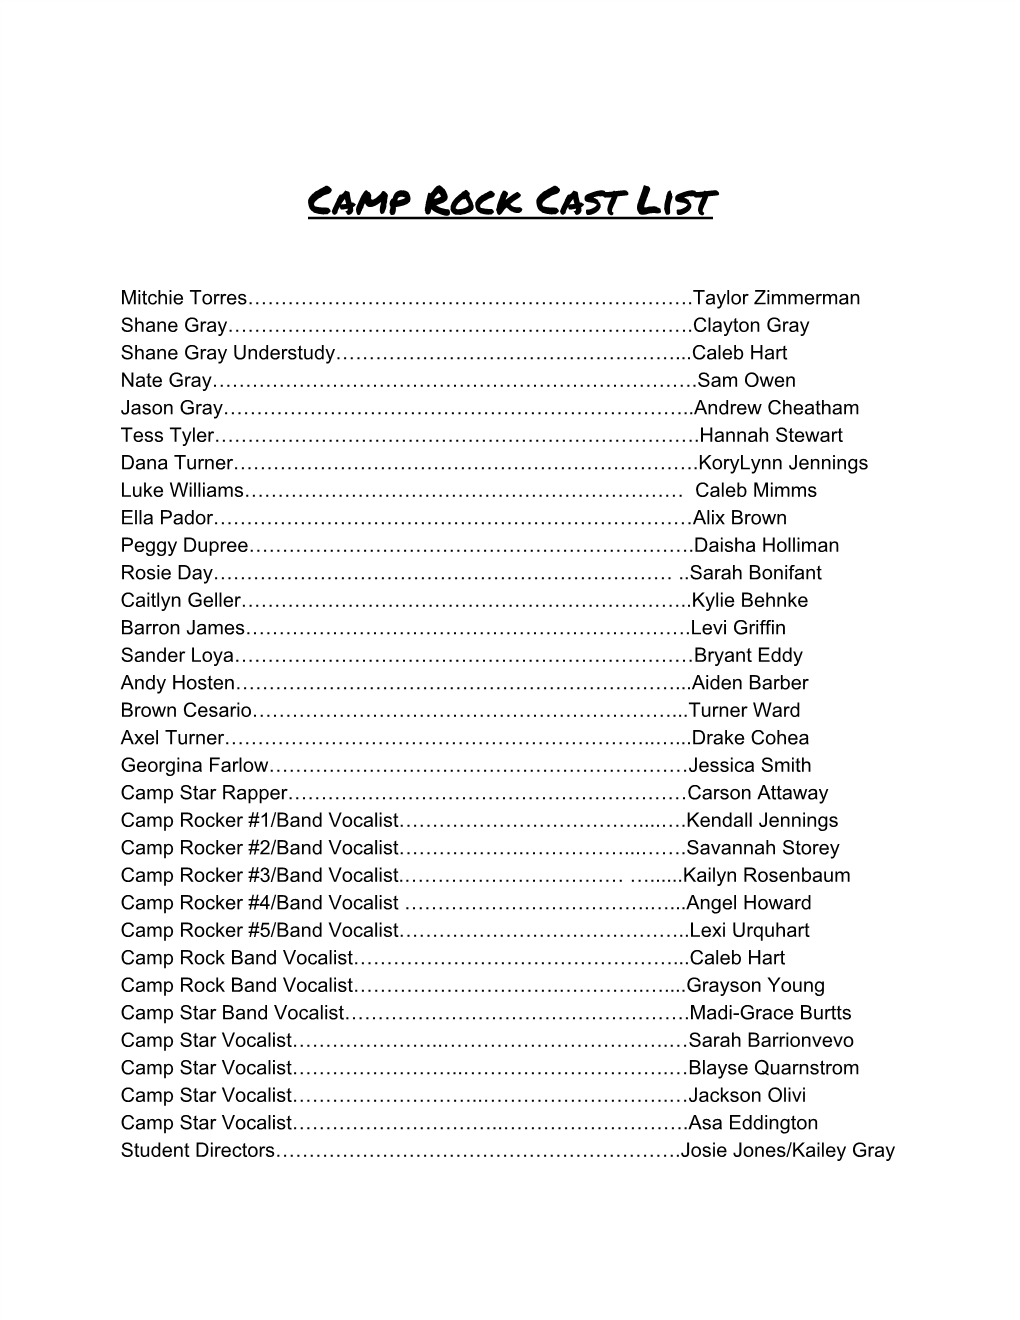 Camp Rock Cast List